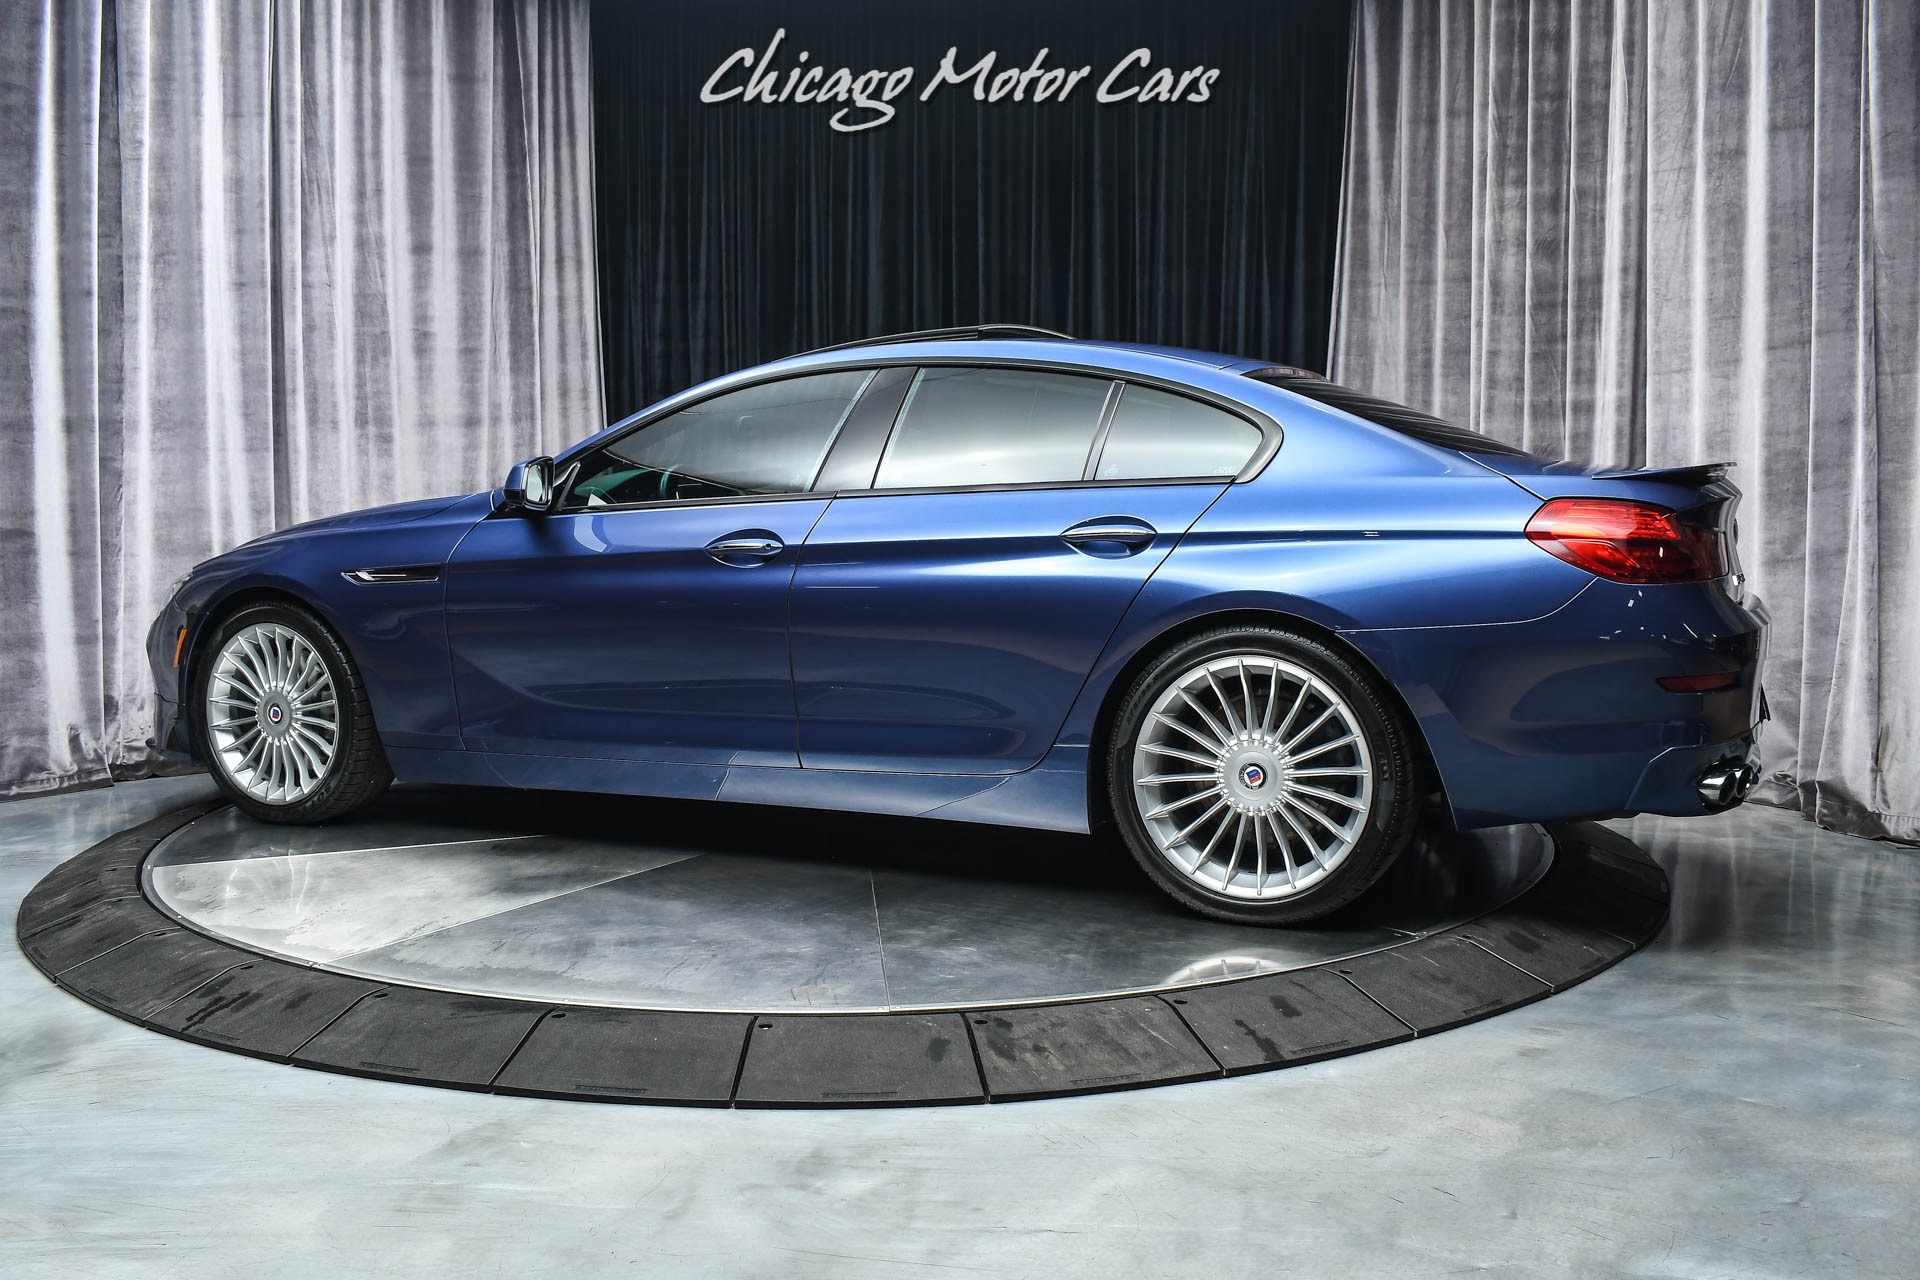 Used-2015-BMW-6-Series-ALPINA-B6-xDrive-Gran-Coupe-127kMSRP-RARE-B6-Example